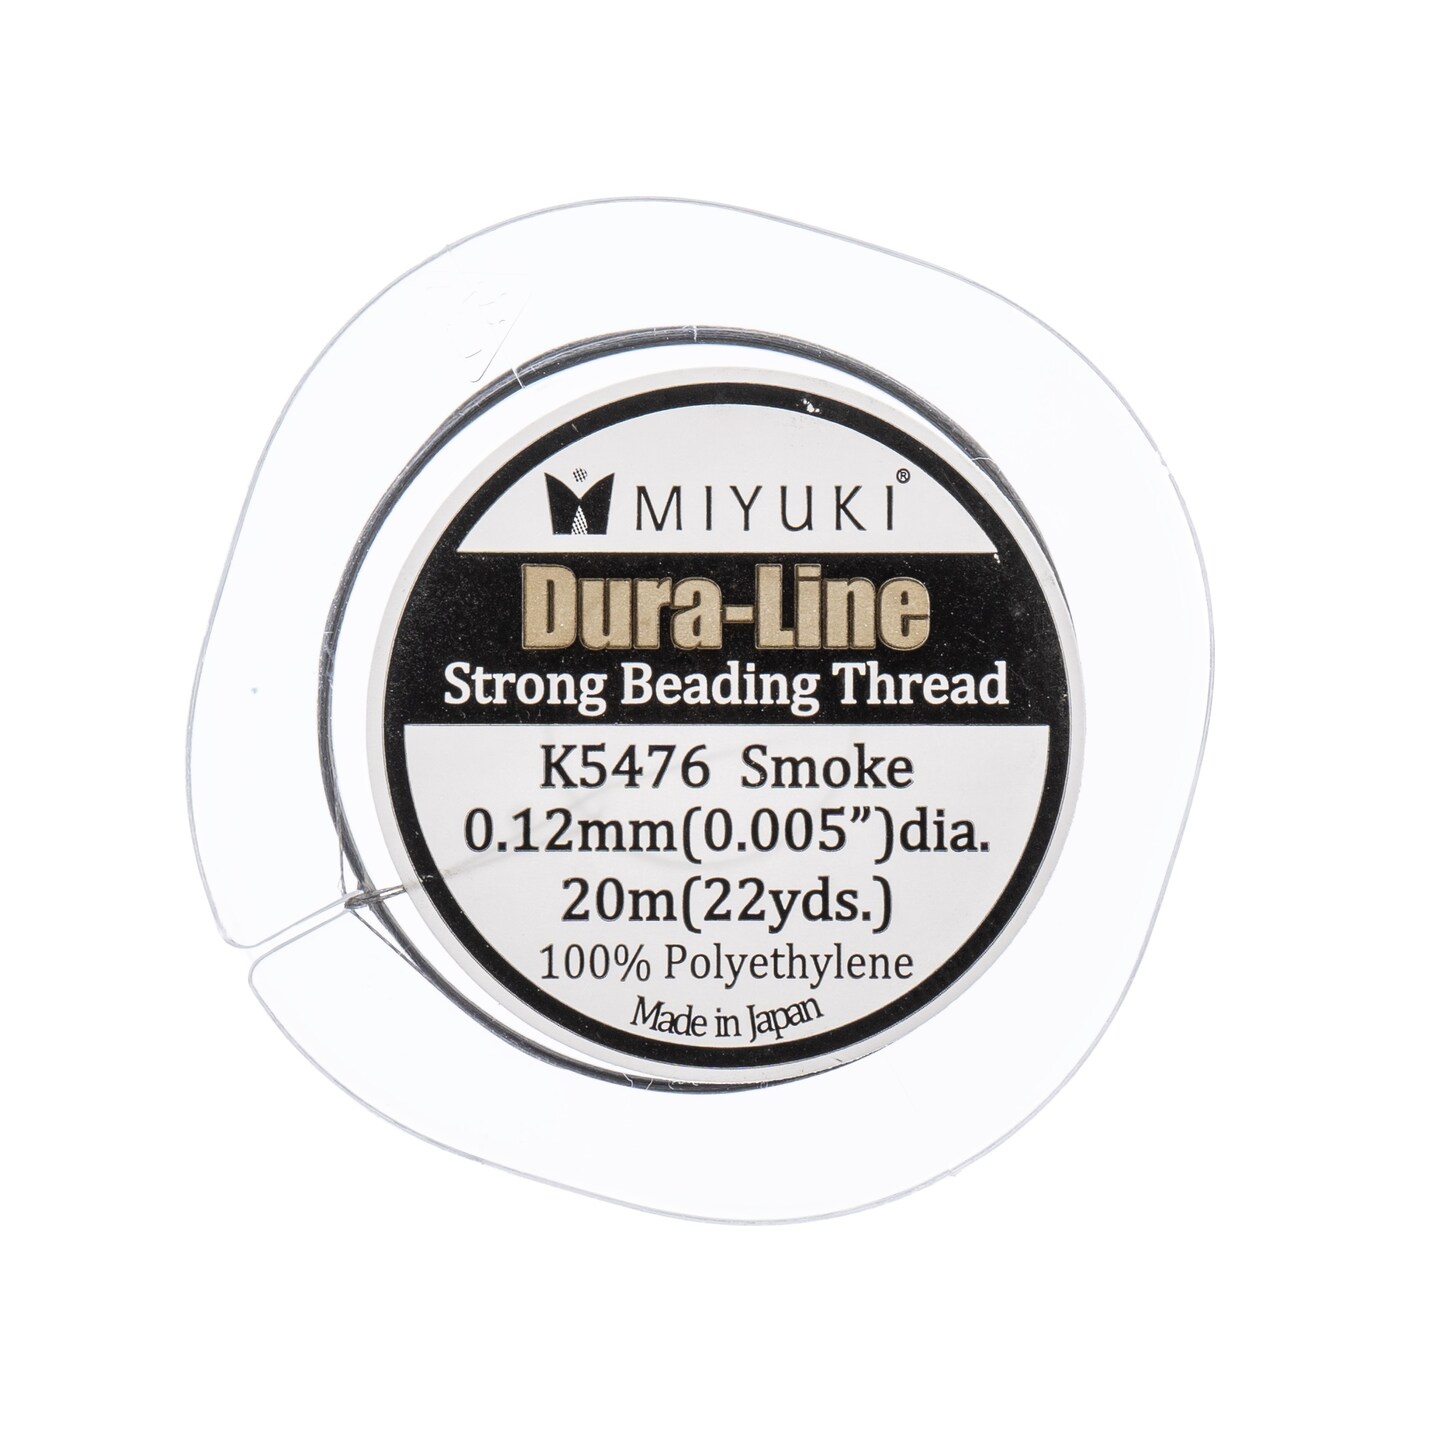 Miyuki Dura-Line 0.12mm Strong Beading Thread, 20m